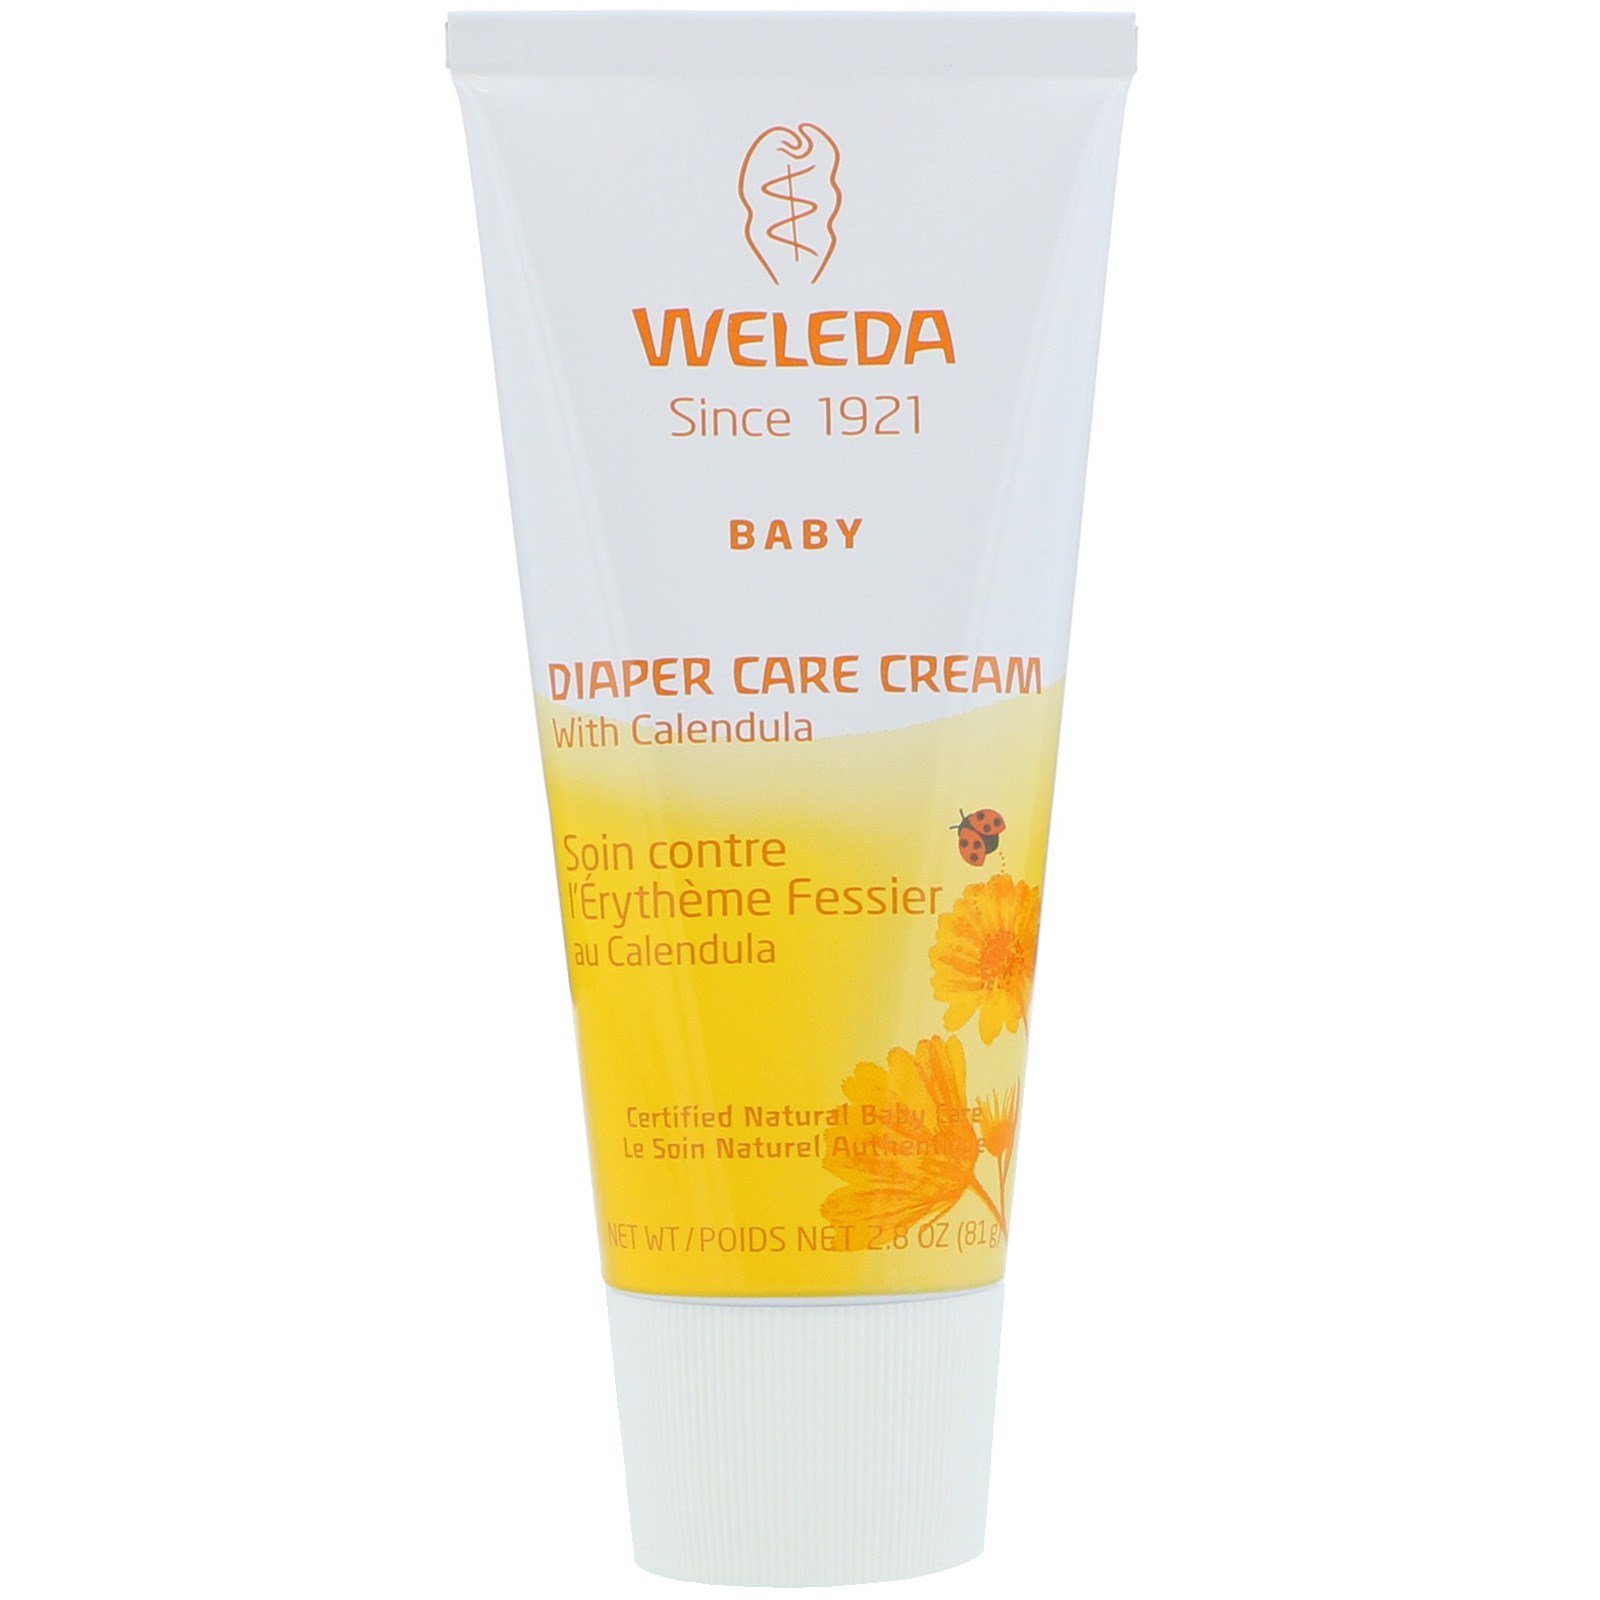 Waleda Diaper Cream